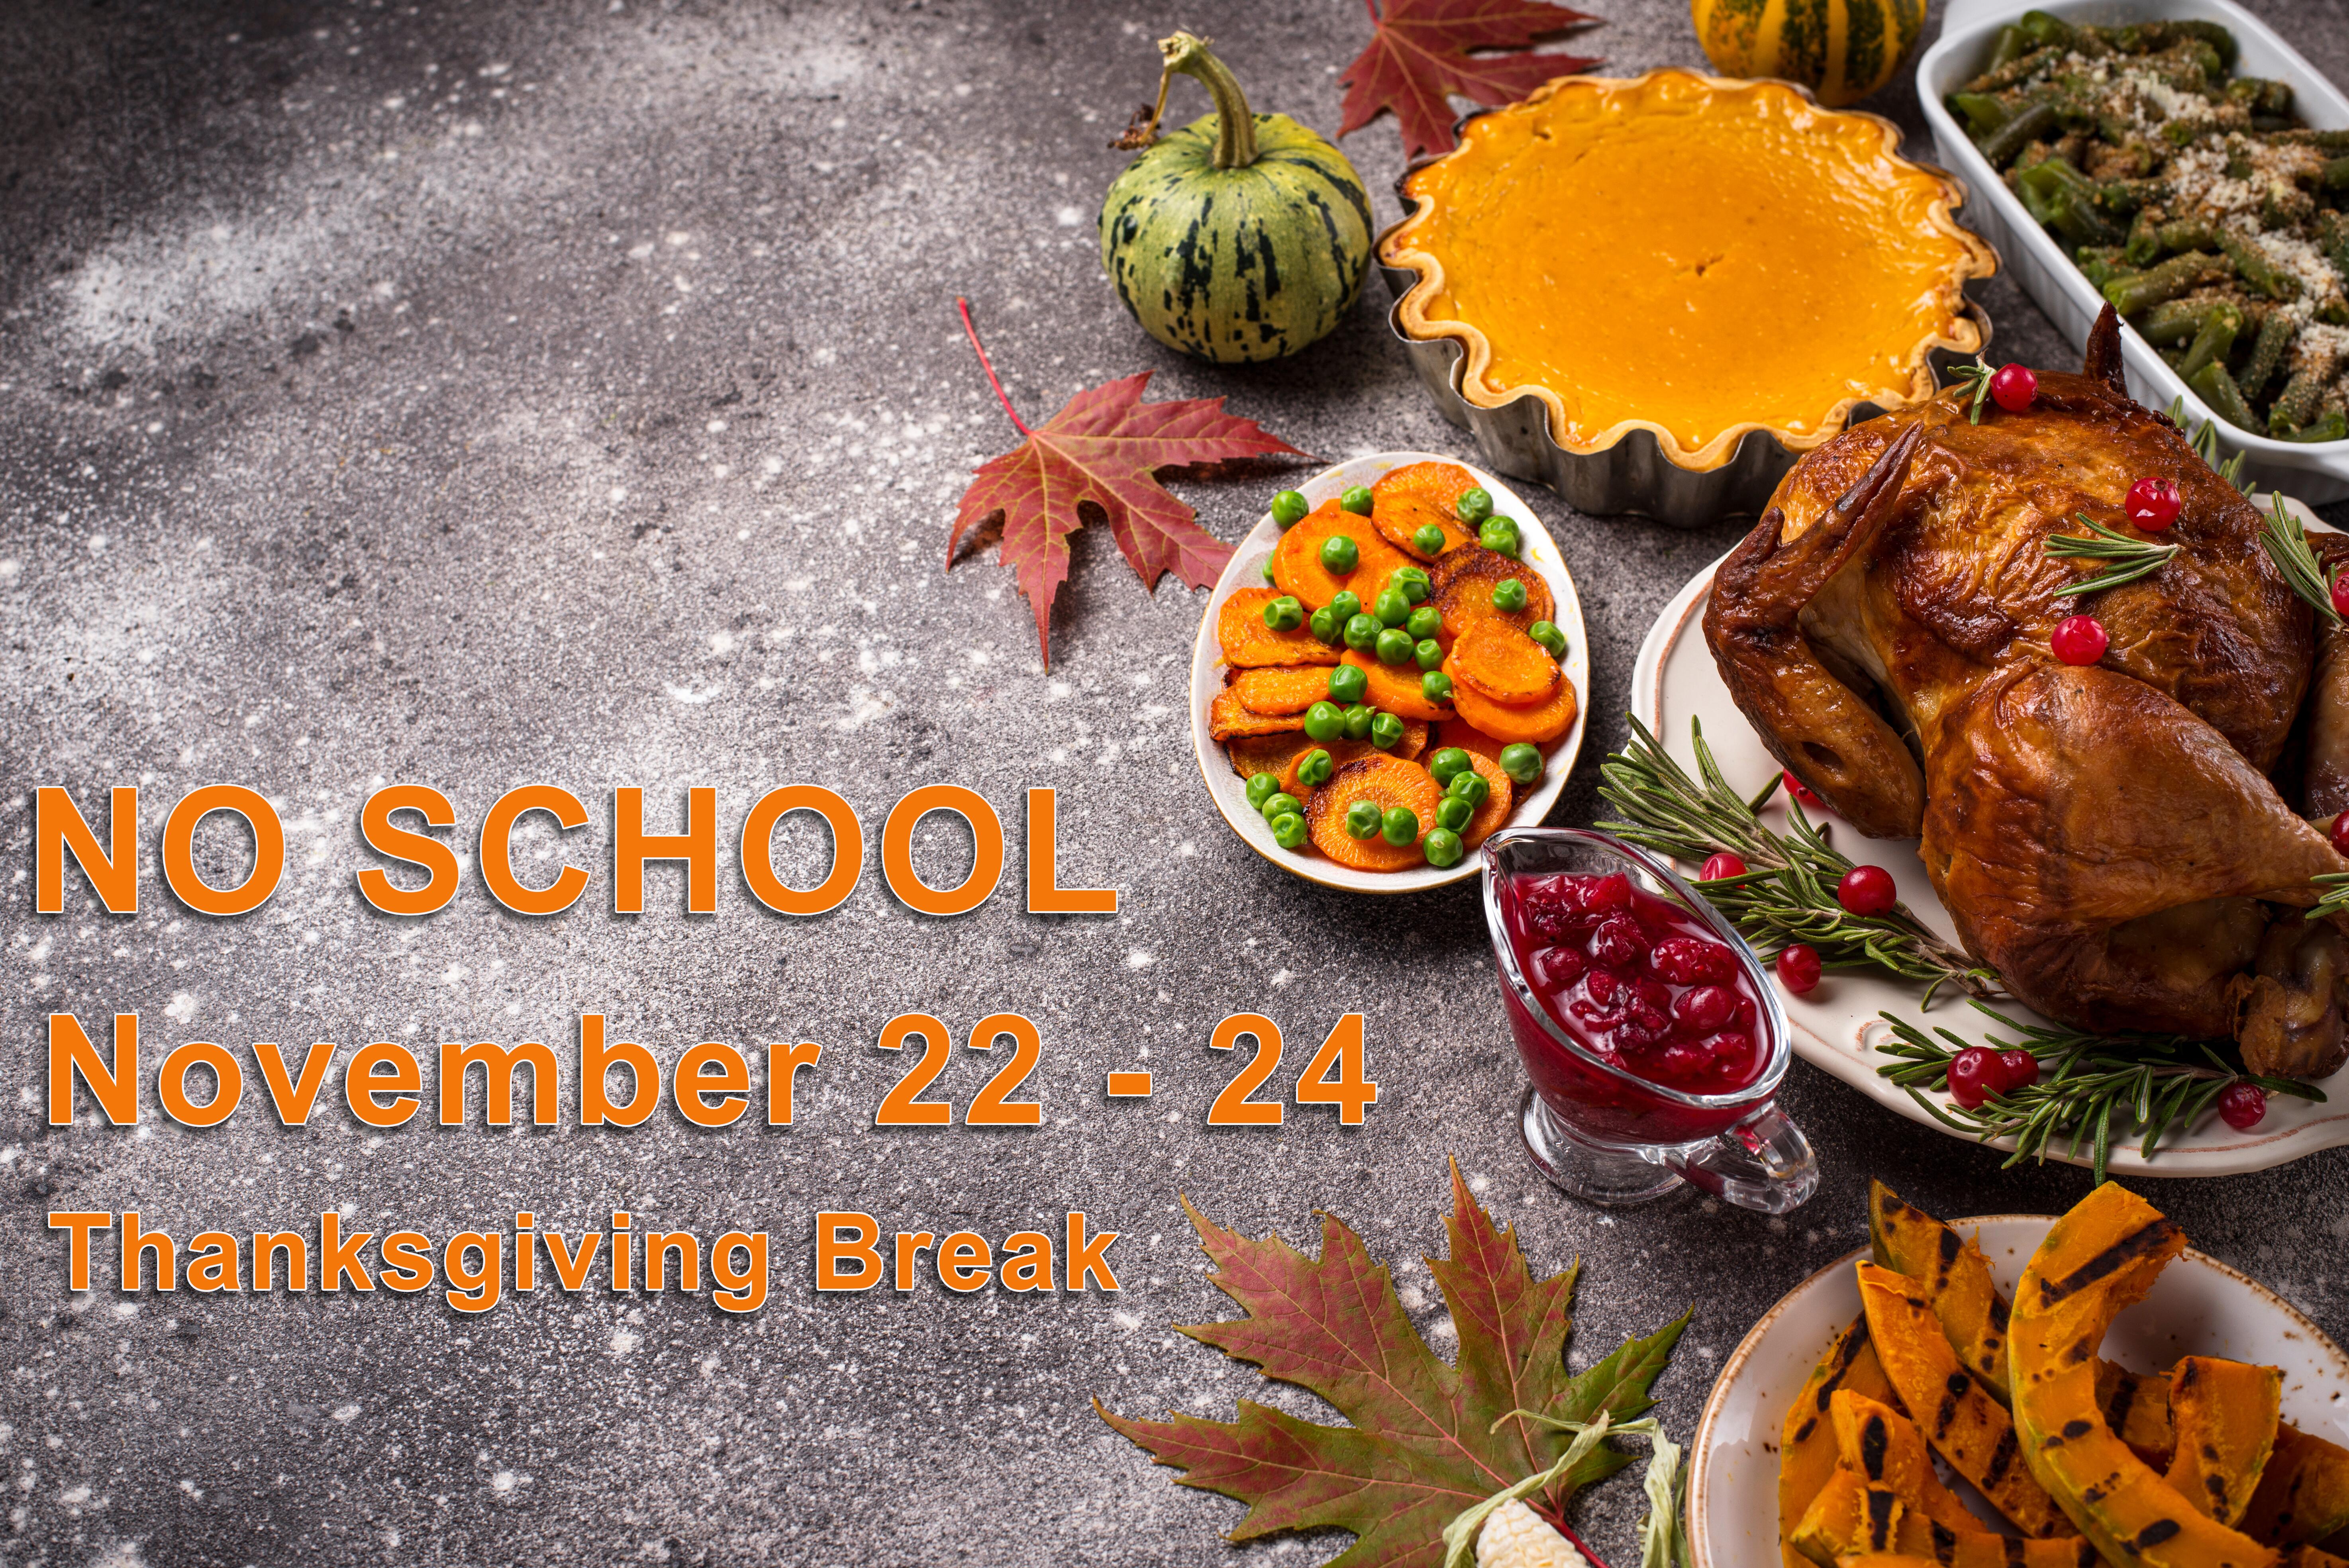 Thanksgiving break Nov 22 - 24, No School